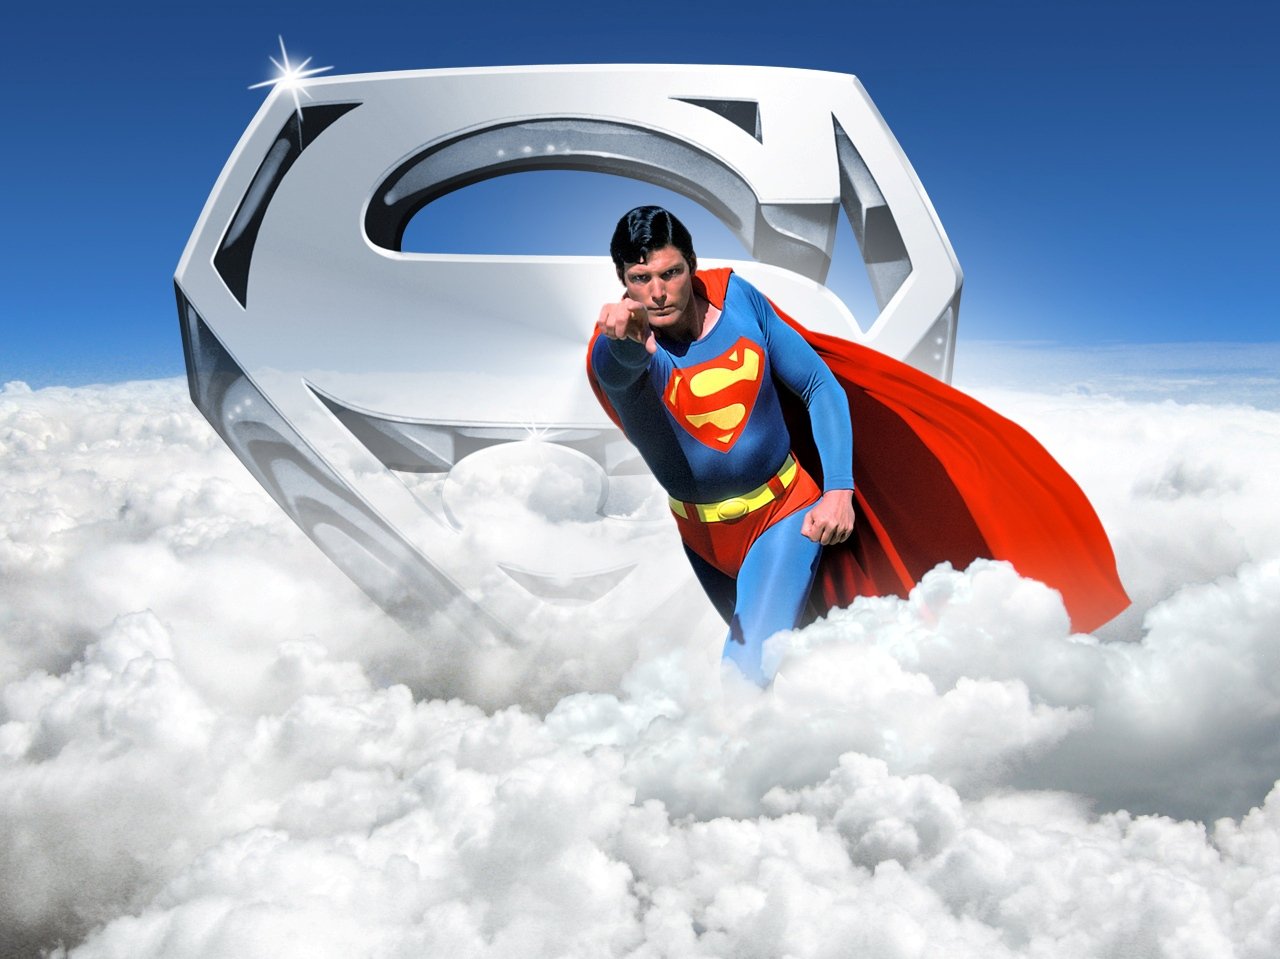 Superman speed up. Супермен. Супермен в облаках. Супермен фотообои. Супермен замерз.